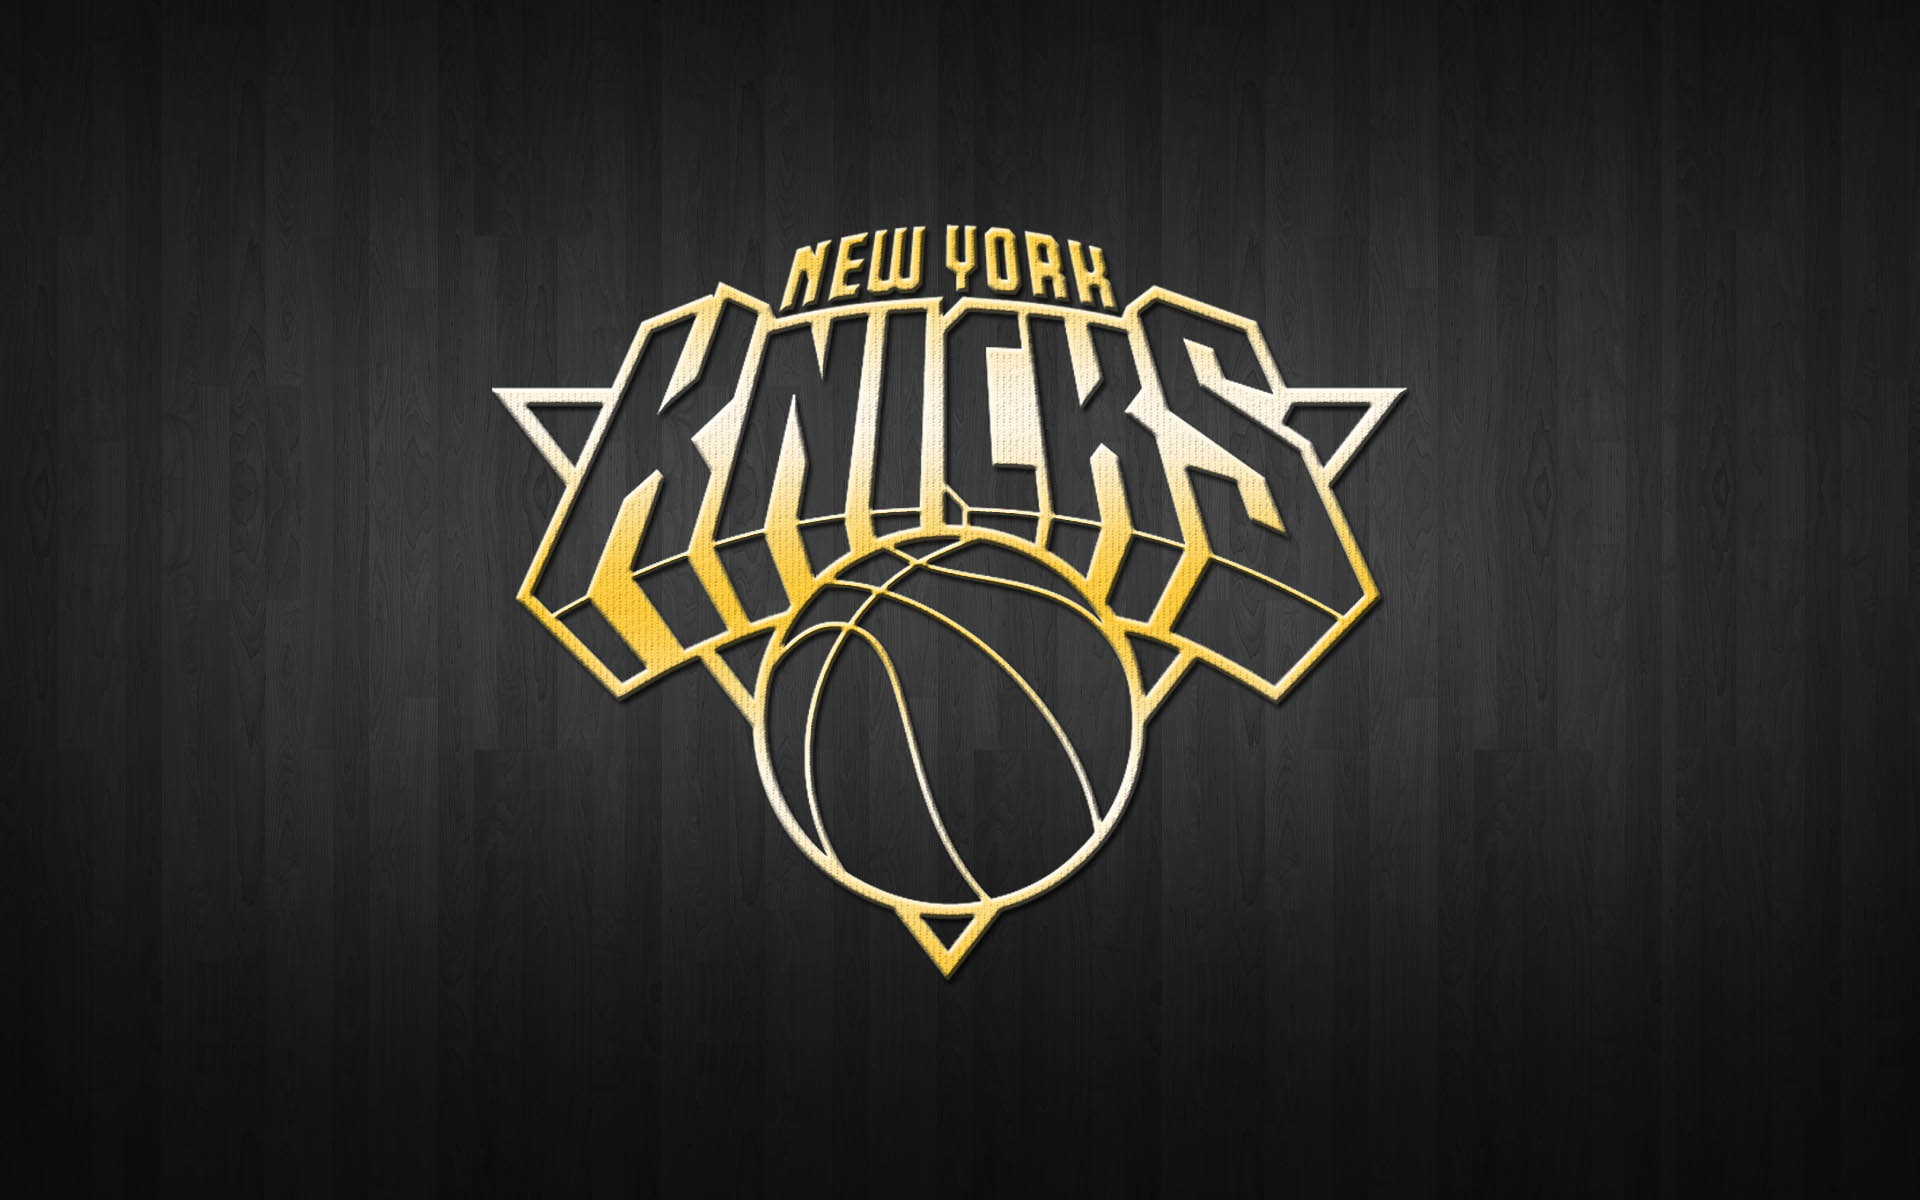 HD Wallpaper Basketball Knicks Nba York